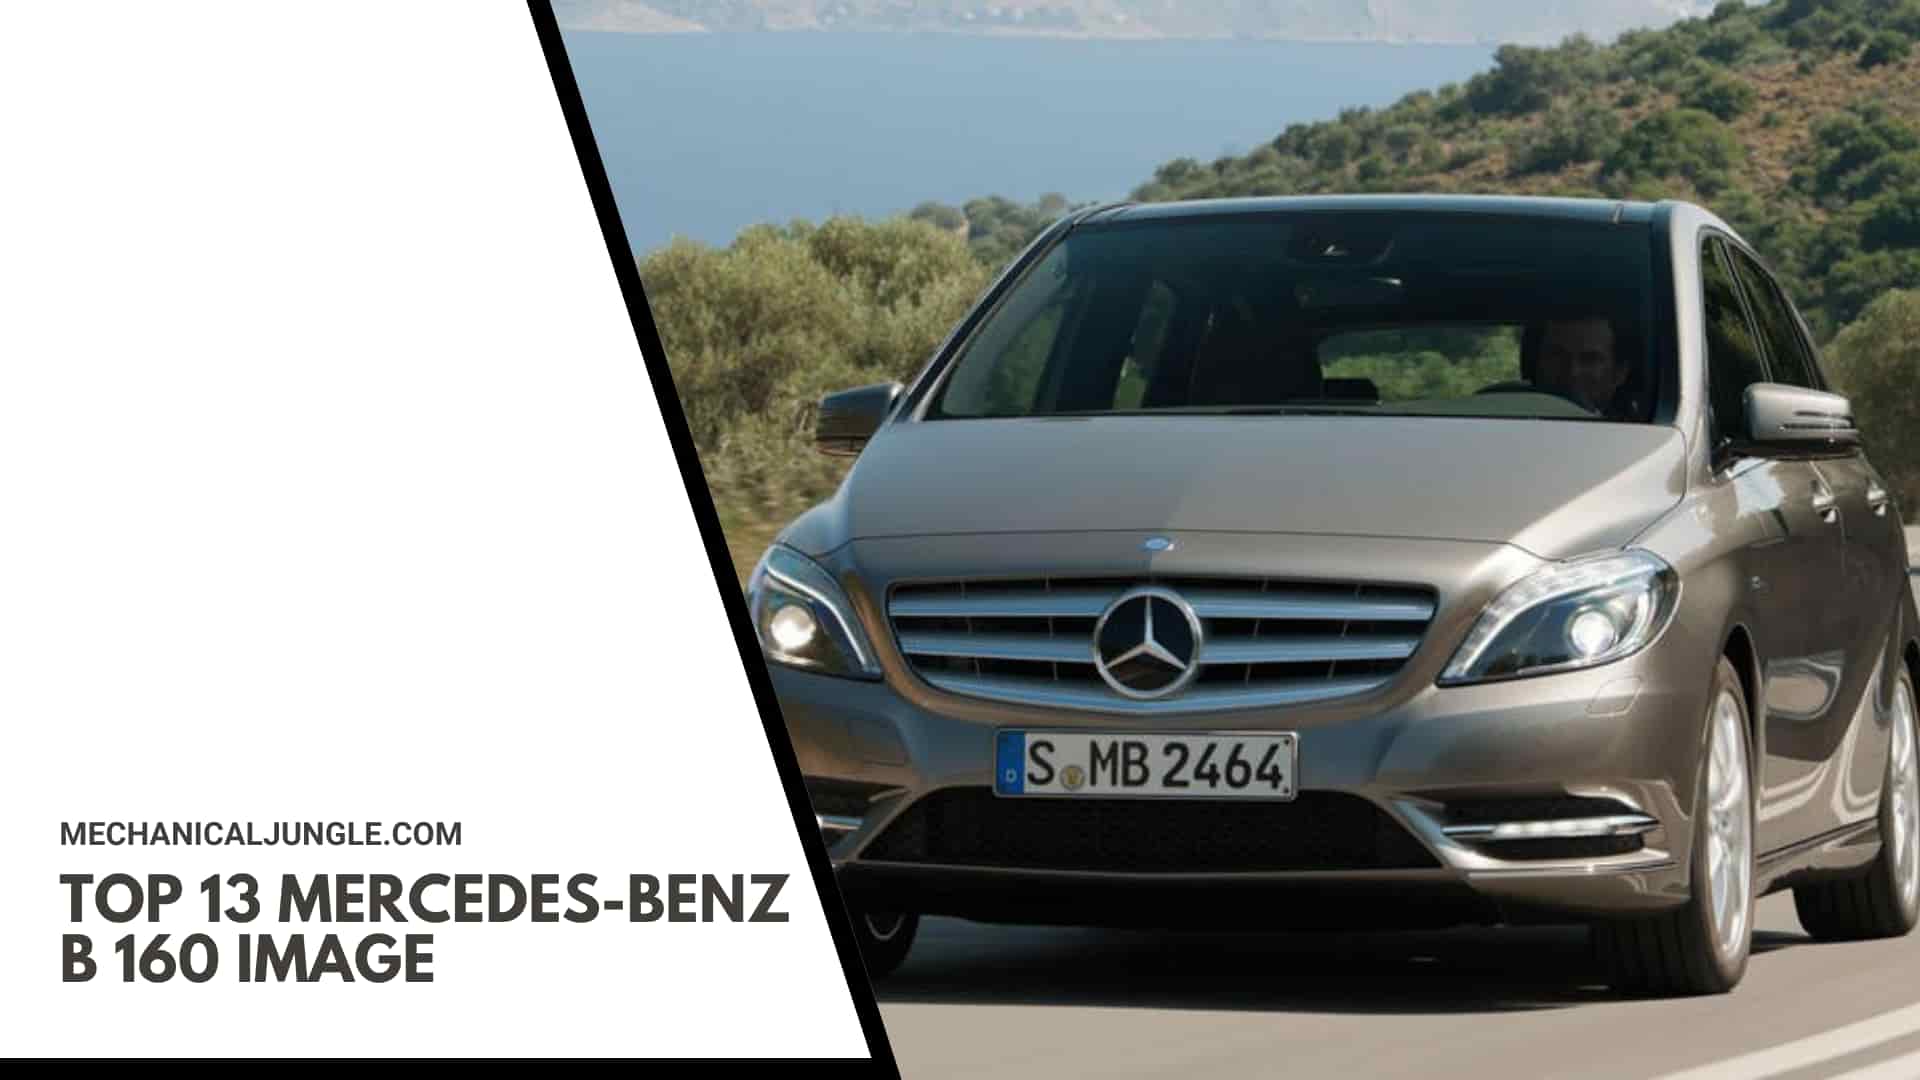 Top 13 Mercedes-Benz B 160 Image